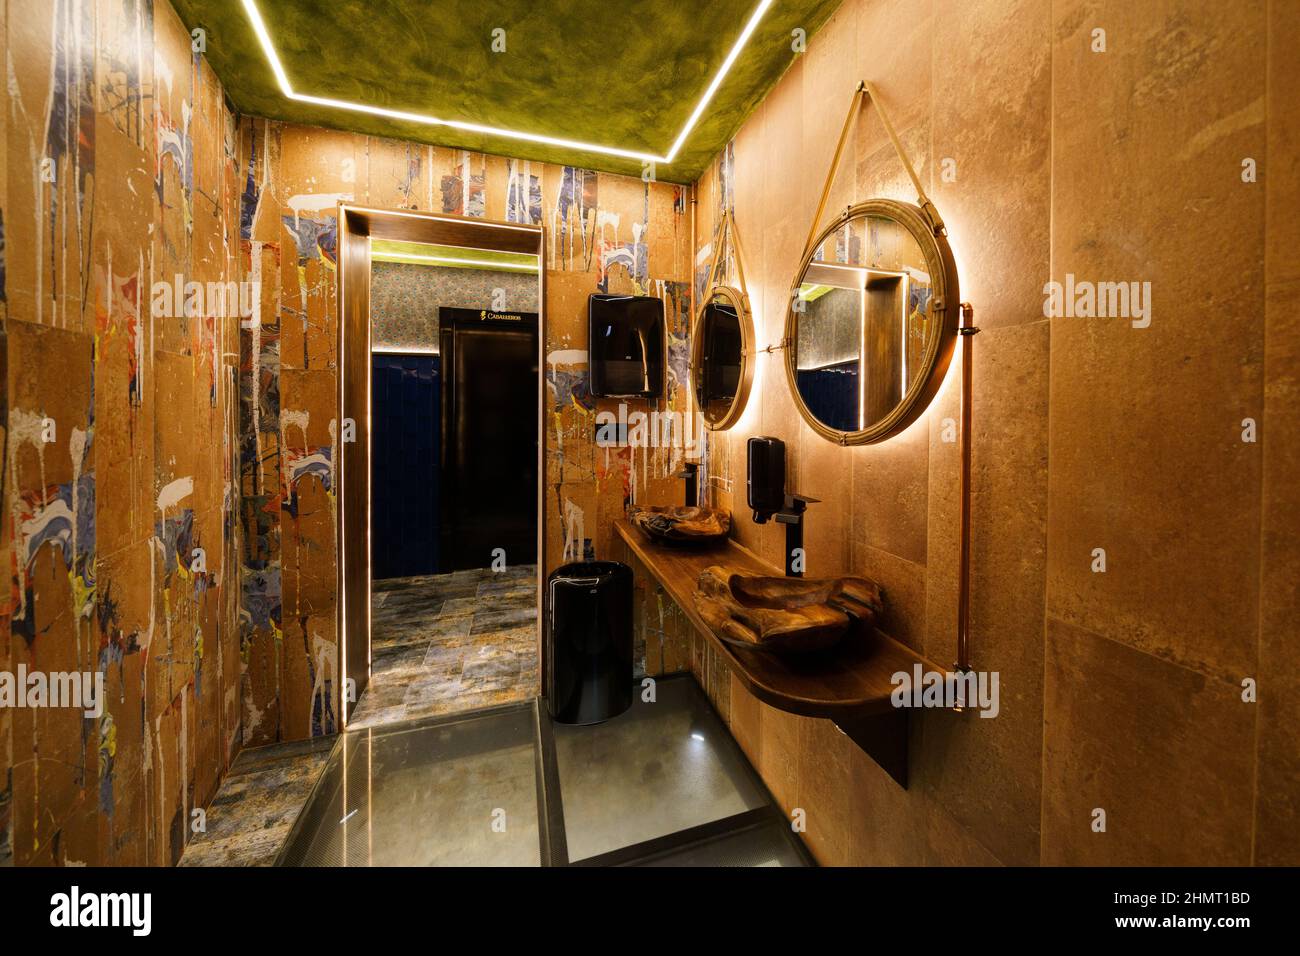 Interior of a bathroom in a luxury restaurant Stock Photo